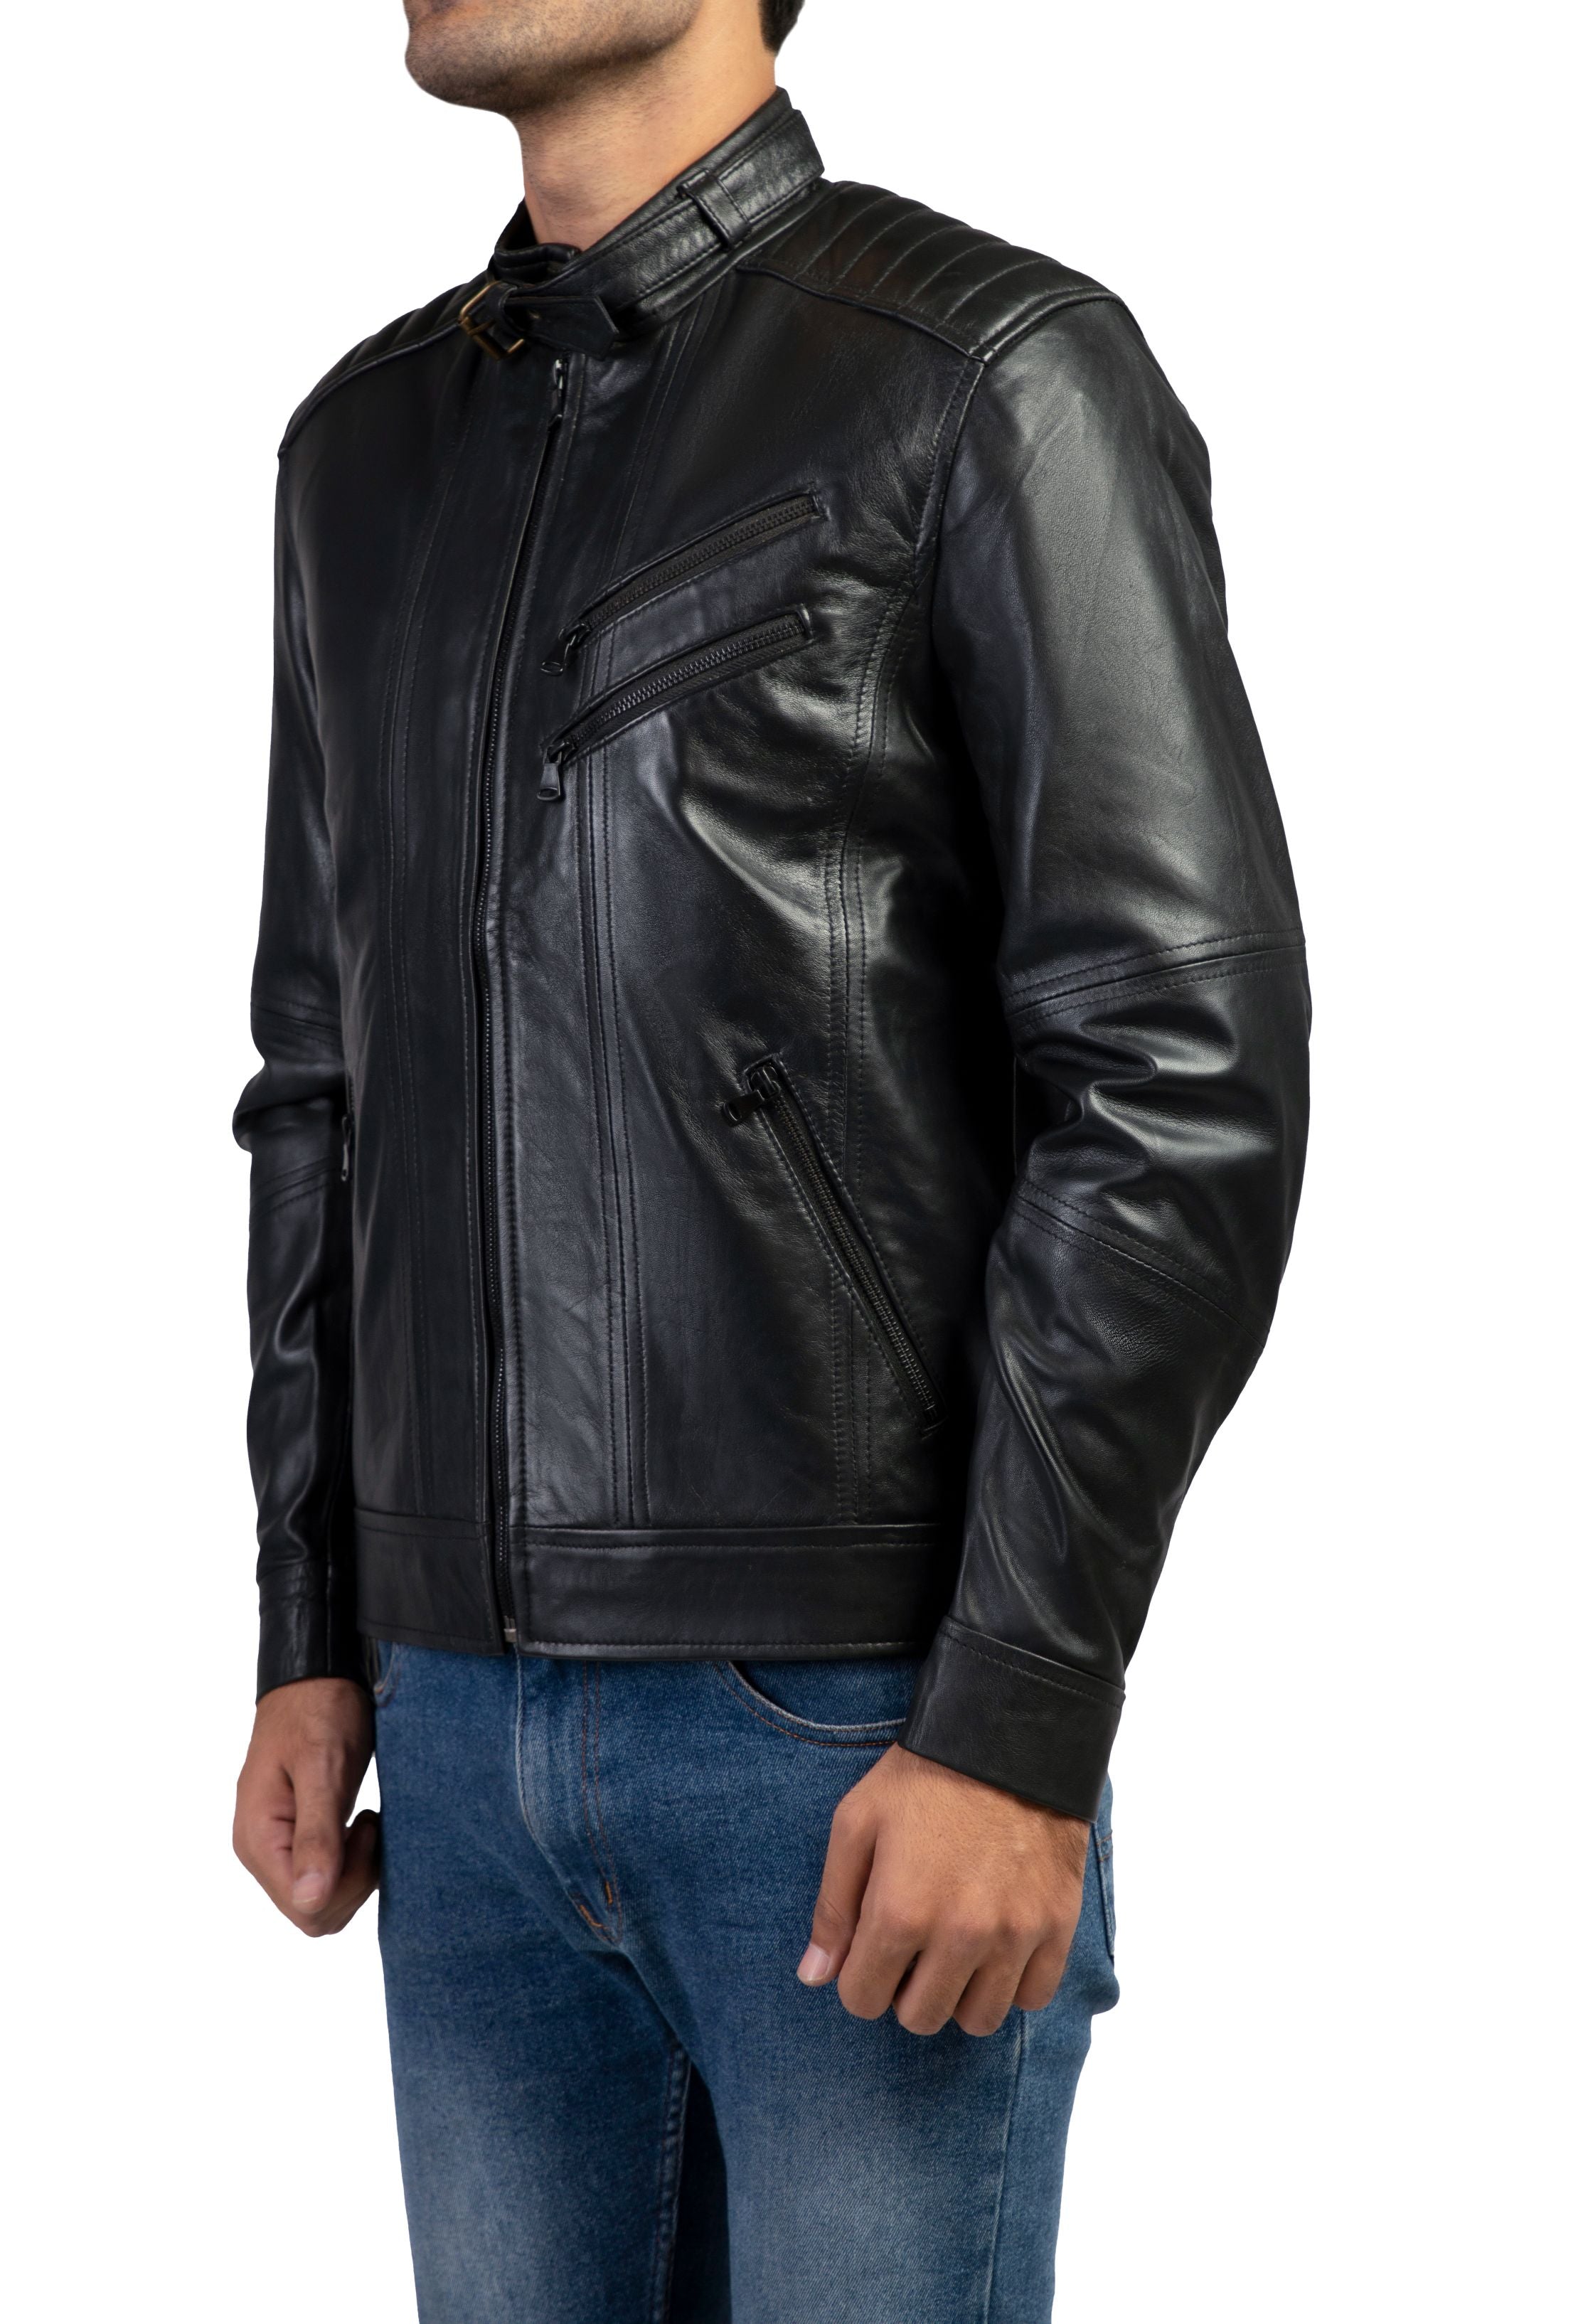 The Bravo Mens Leather Jacket-Black